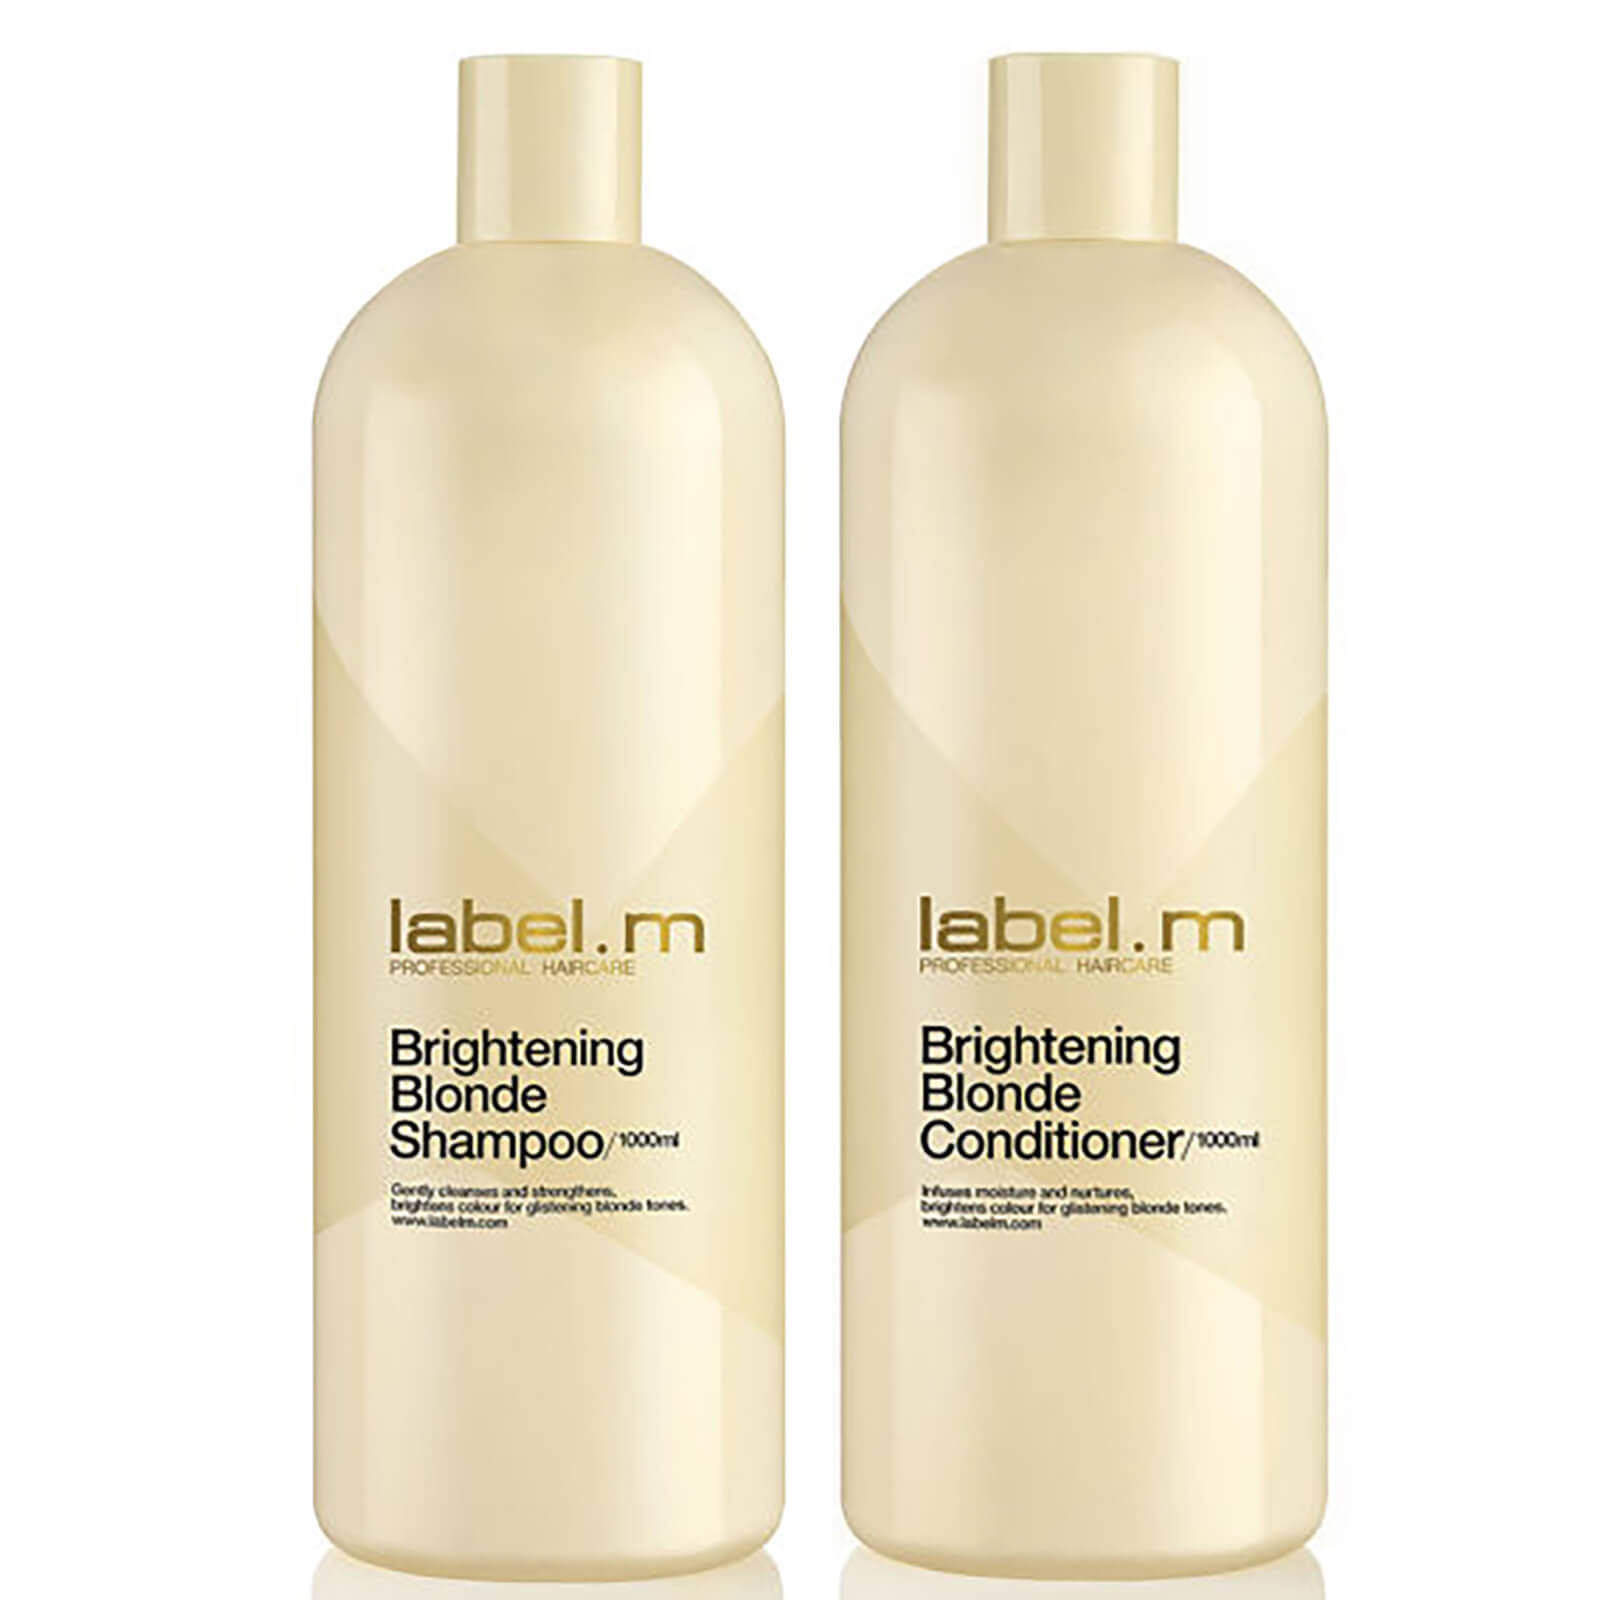 label.m Brightening Blonde Shampoo and Conditioner 1000ml Duo